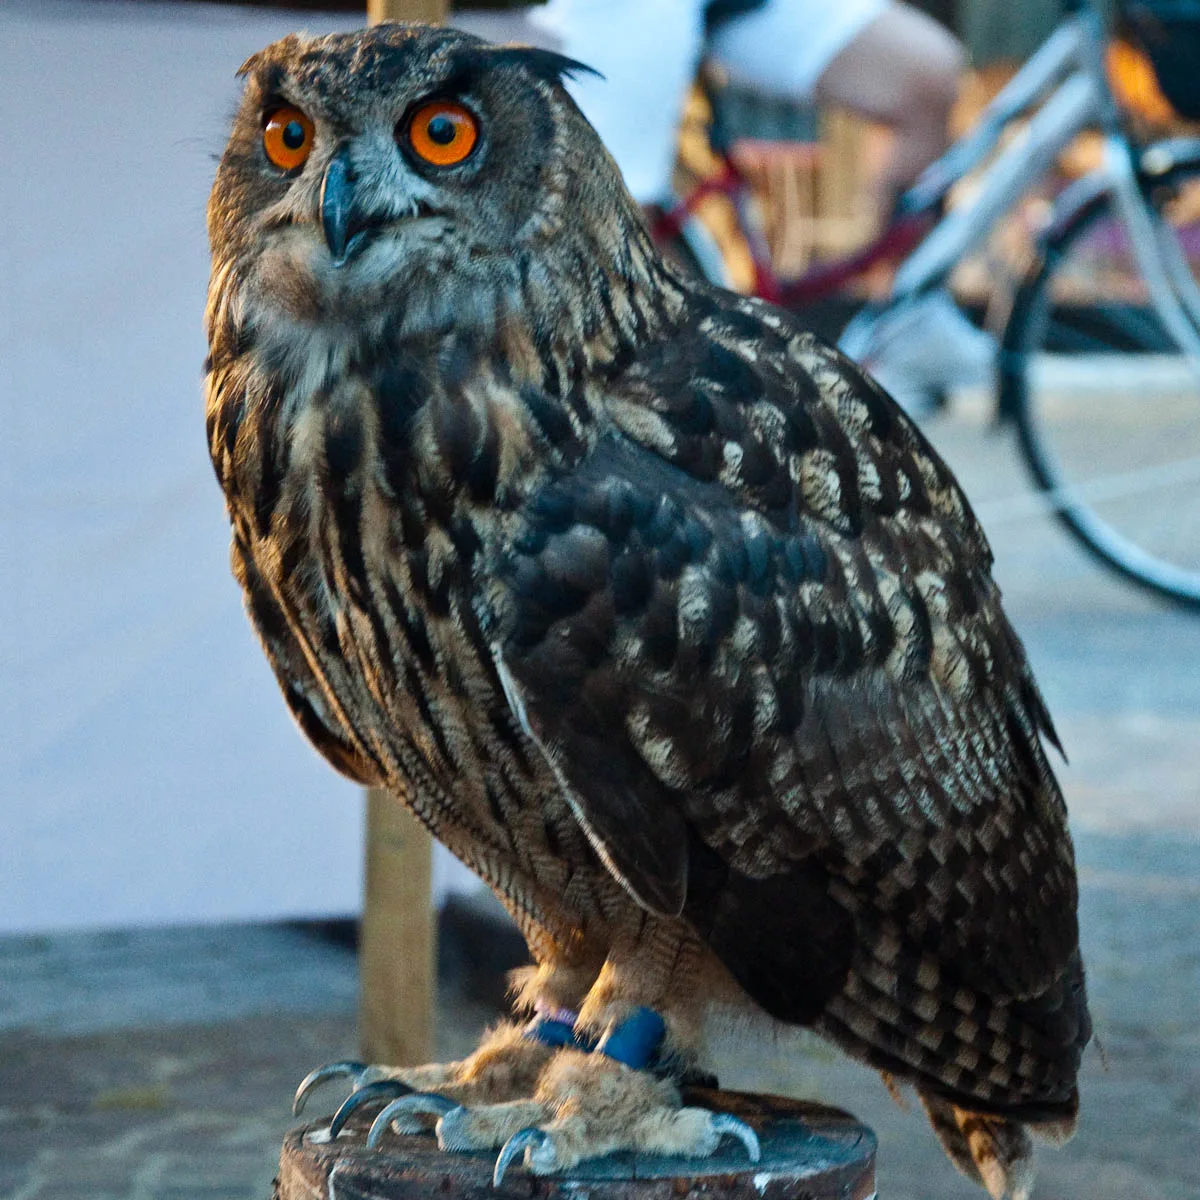 An owl, Mediaevil Fair, Castelfranco Veneto, Italy - www.rossiwrites.com